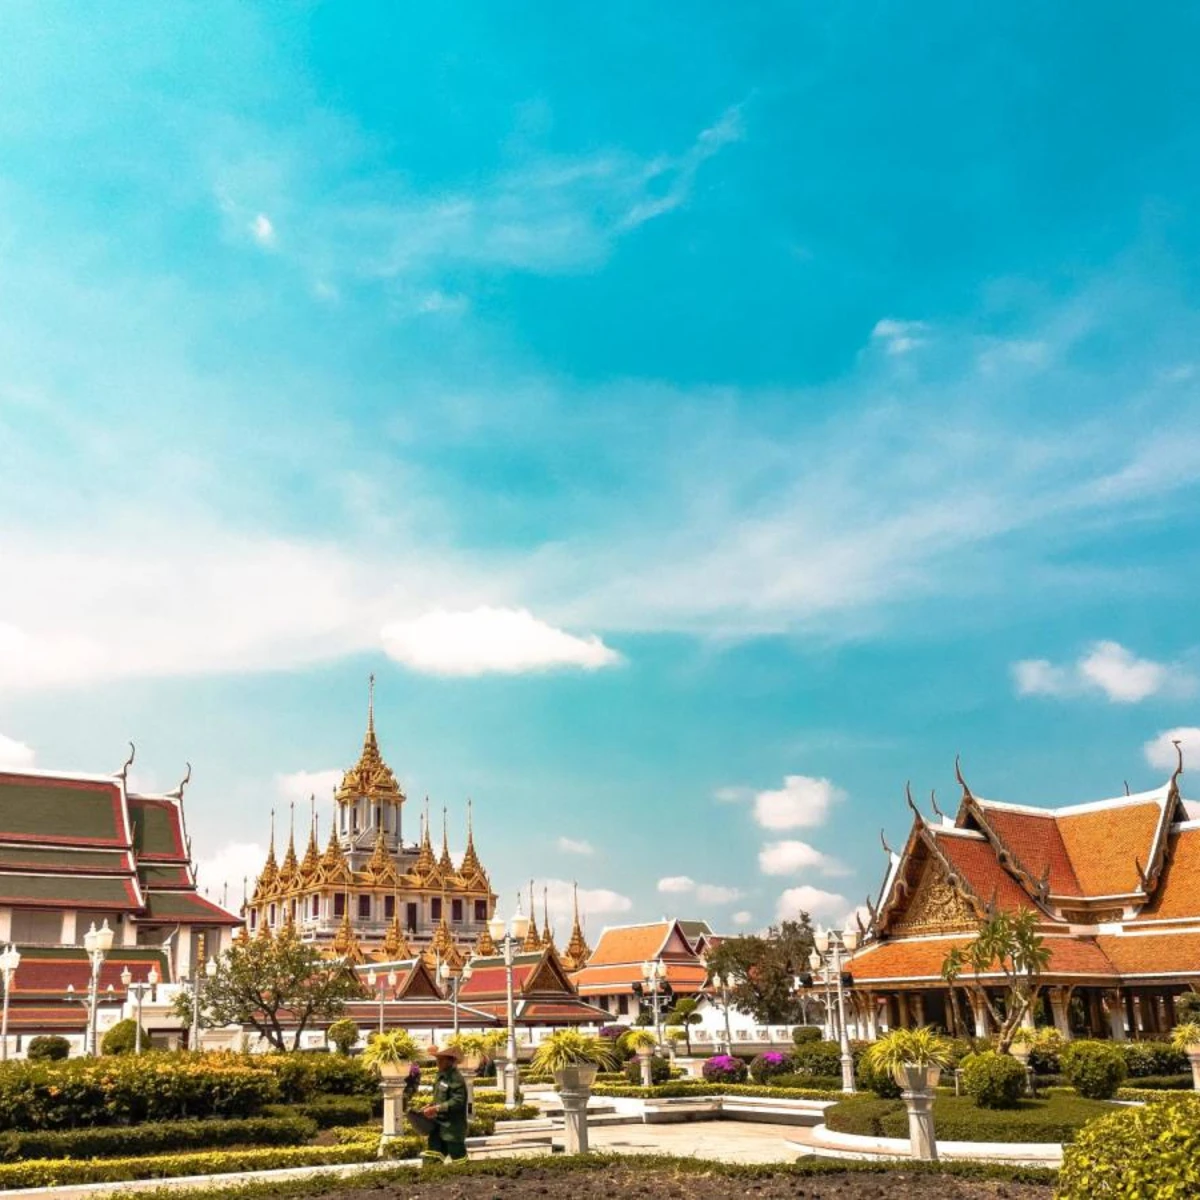 Loha Prasat temple on a sunny day in Bangkok.